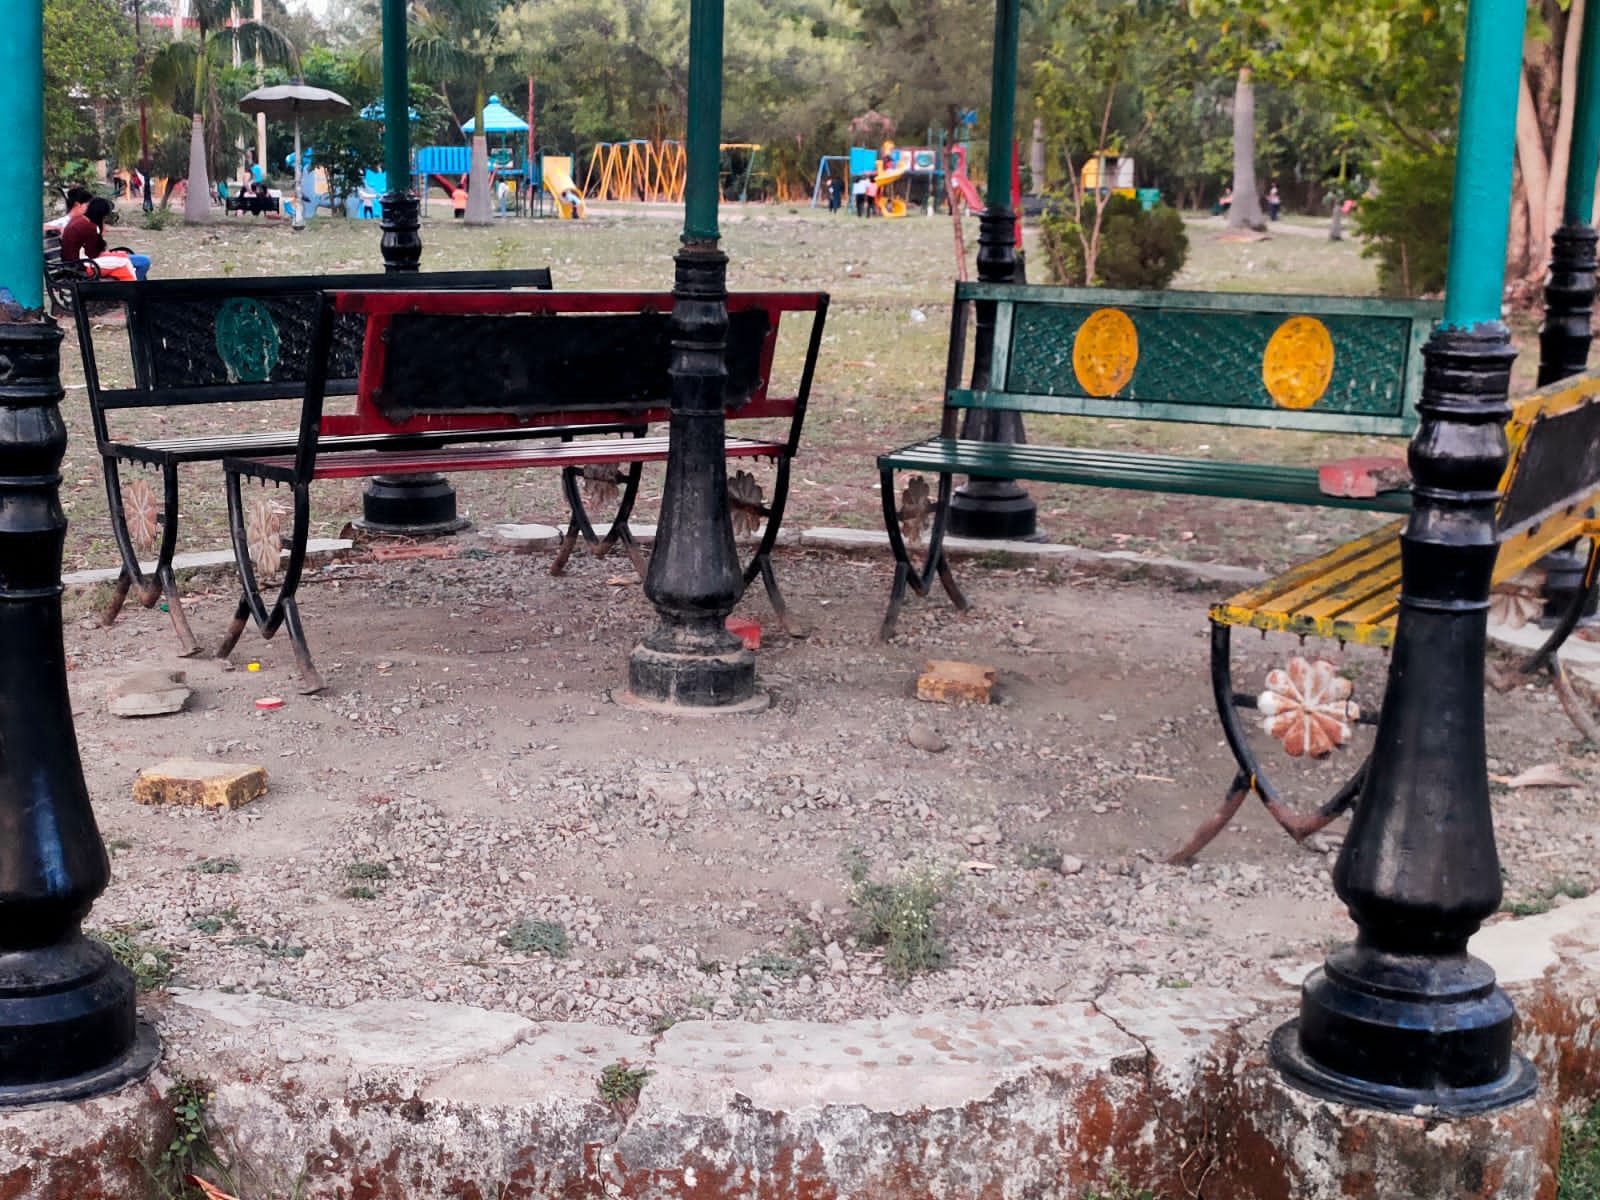 Trimbakeshwar Children's Park swings broken, deteriorated due to lack of care